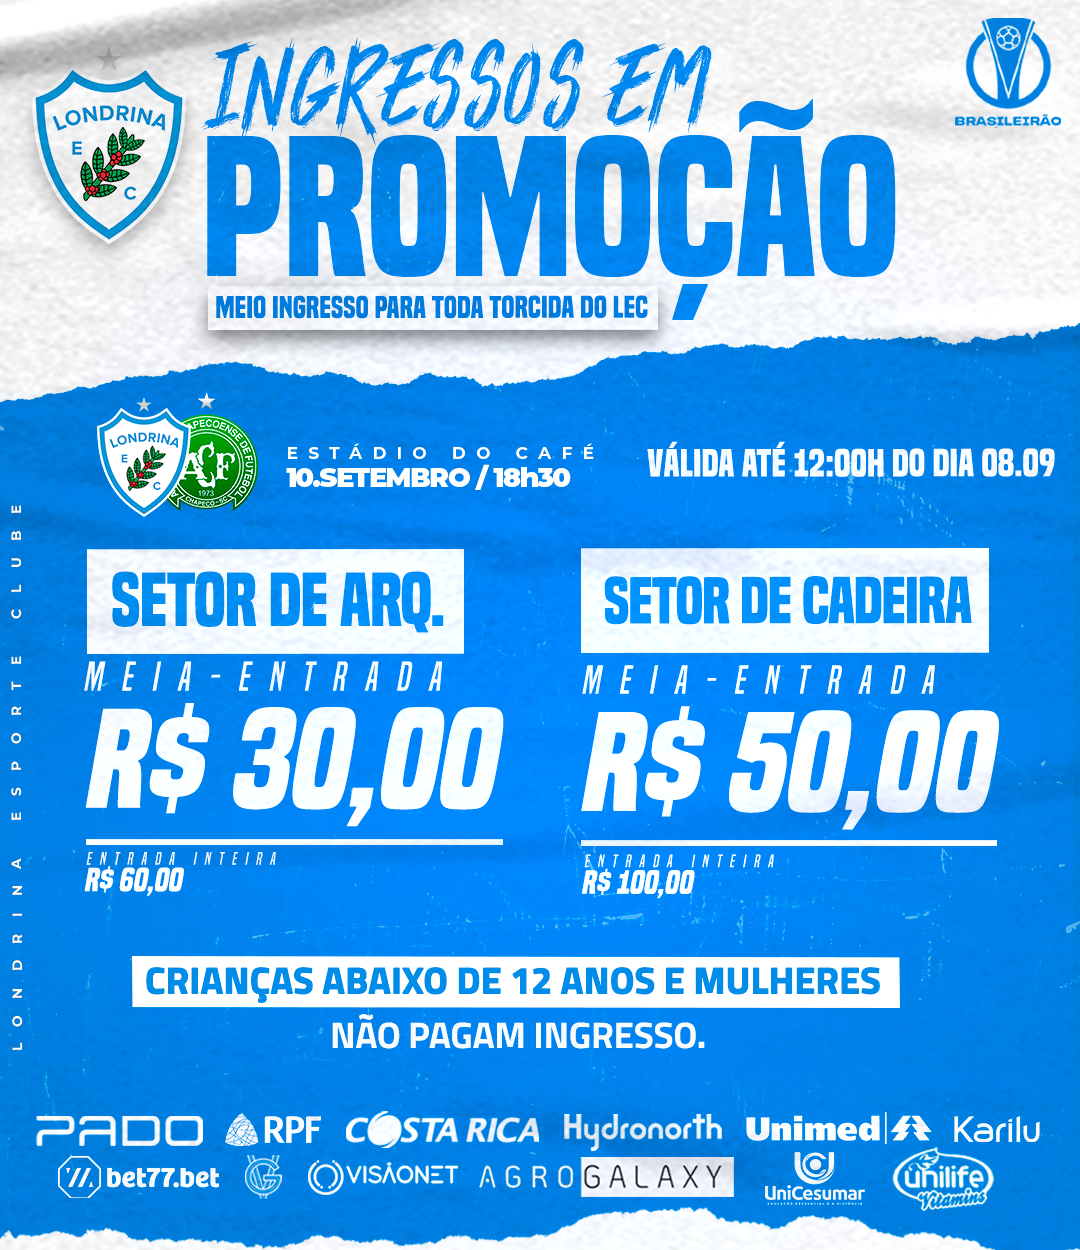 Ingressos à venda para Londrina Esporte Clube x Chapecoense 